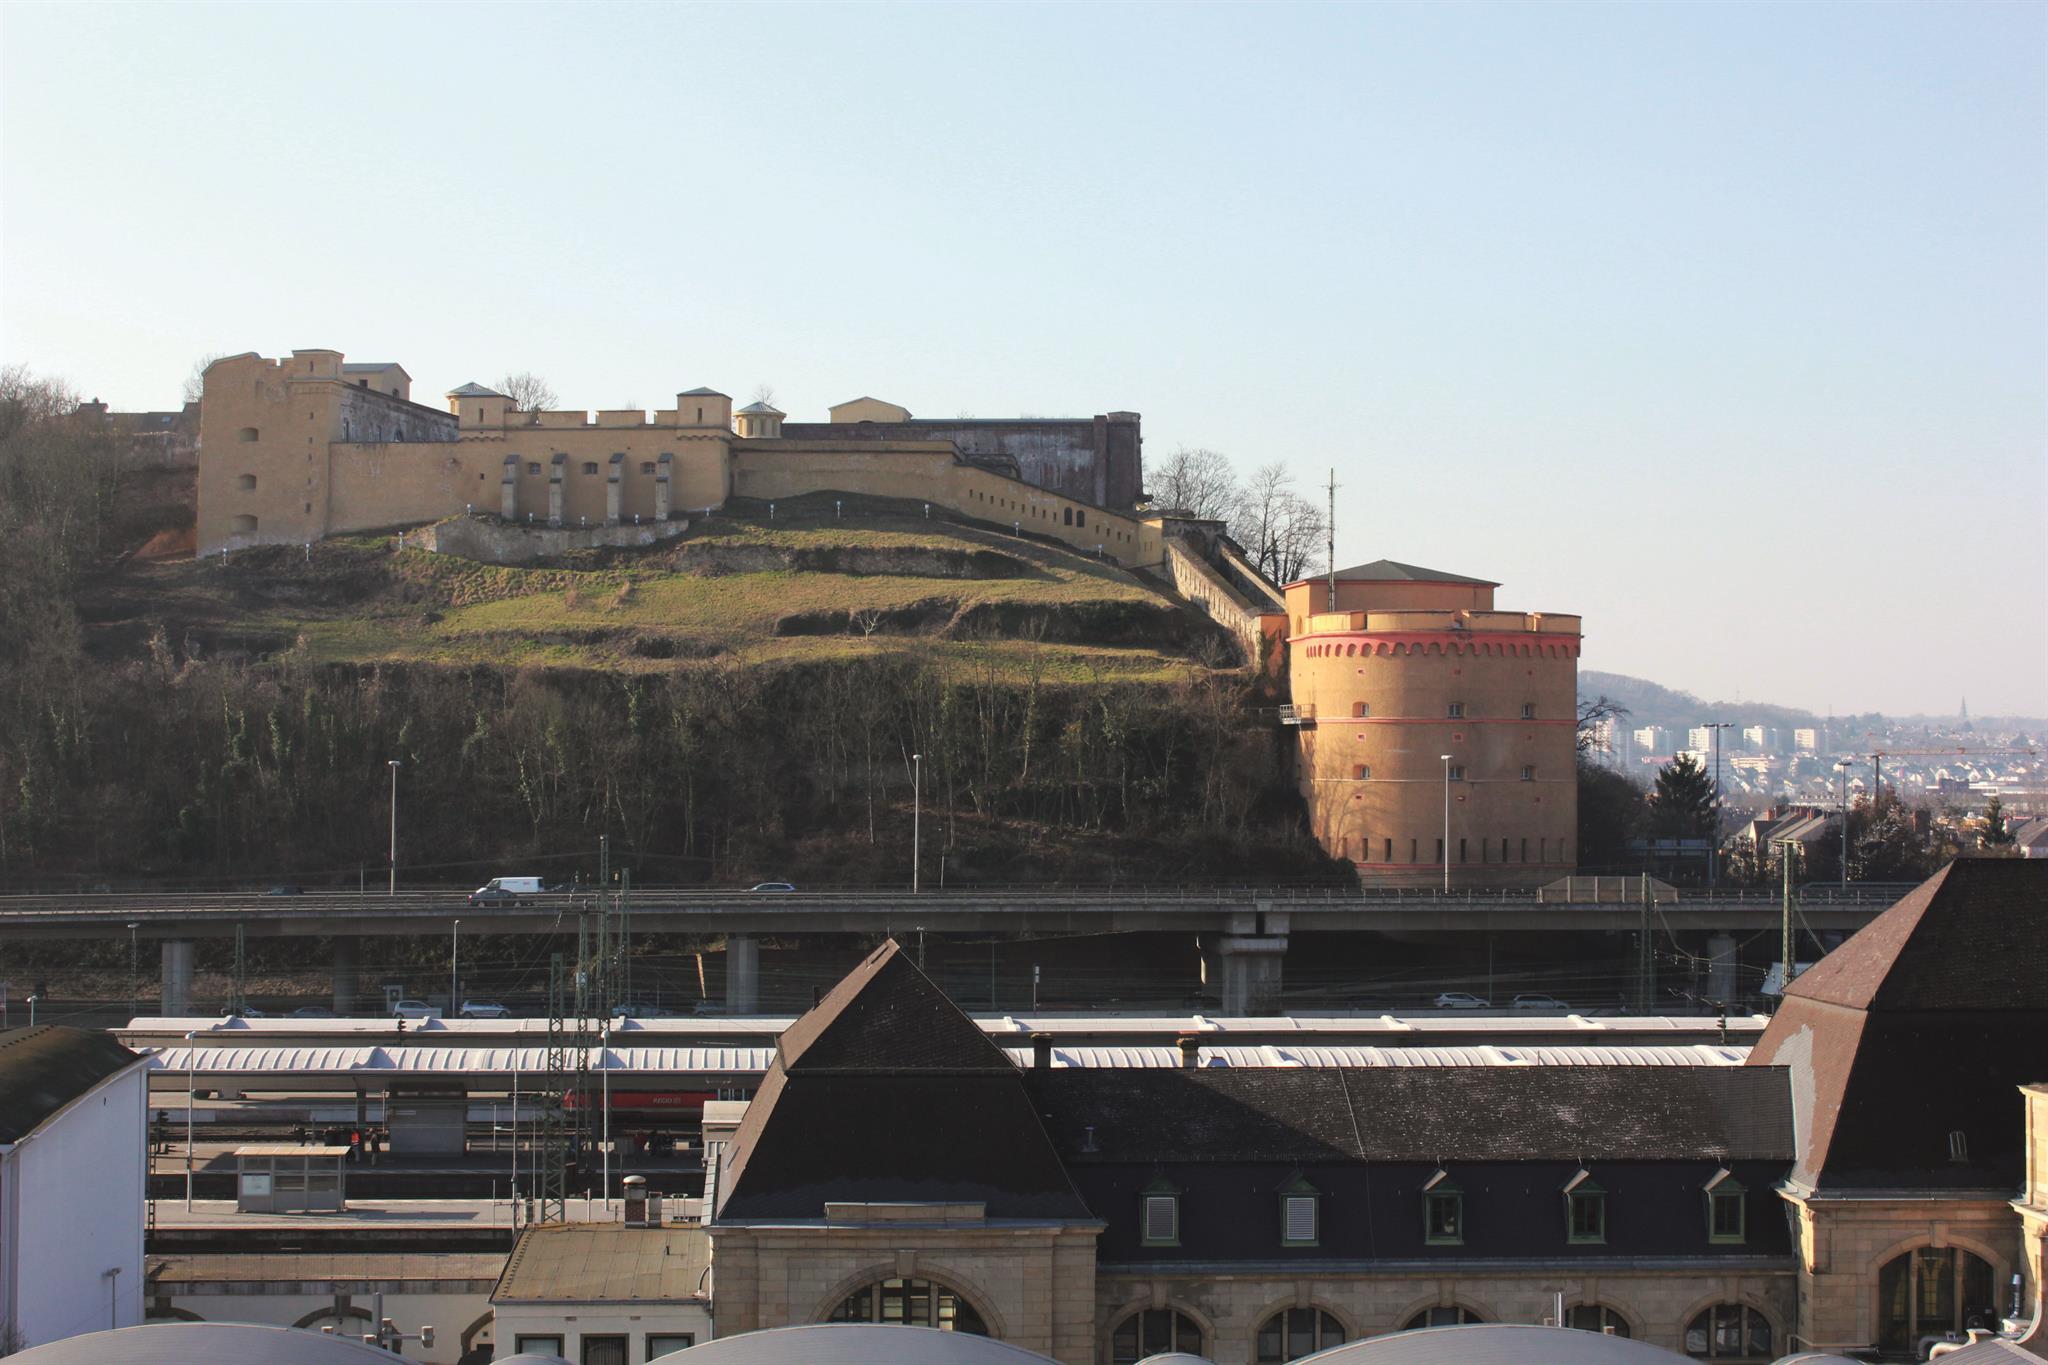 Fort Konstantin